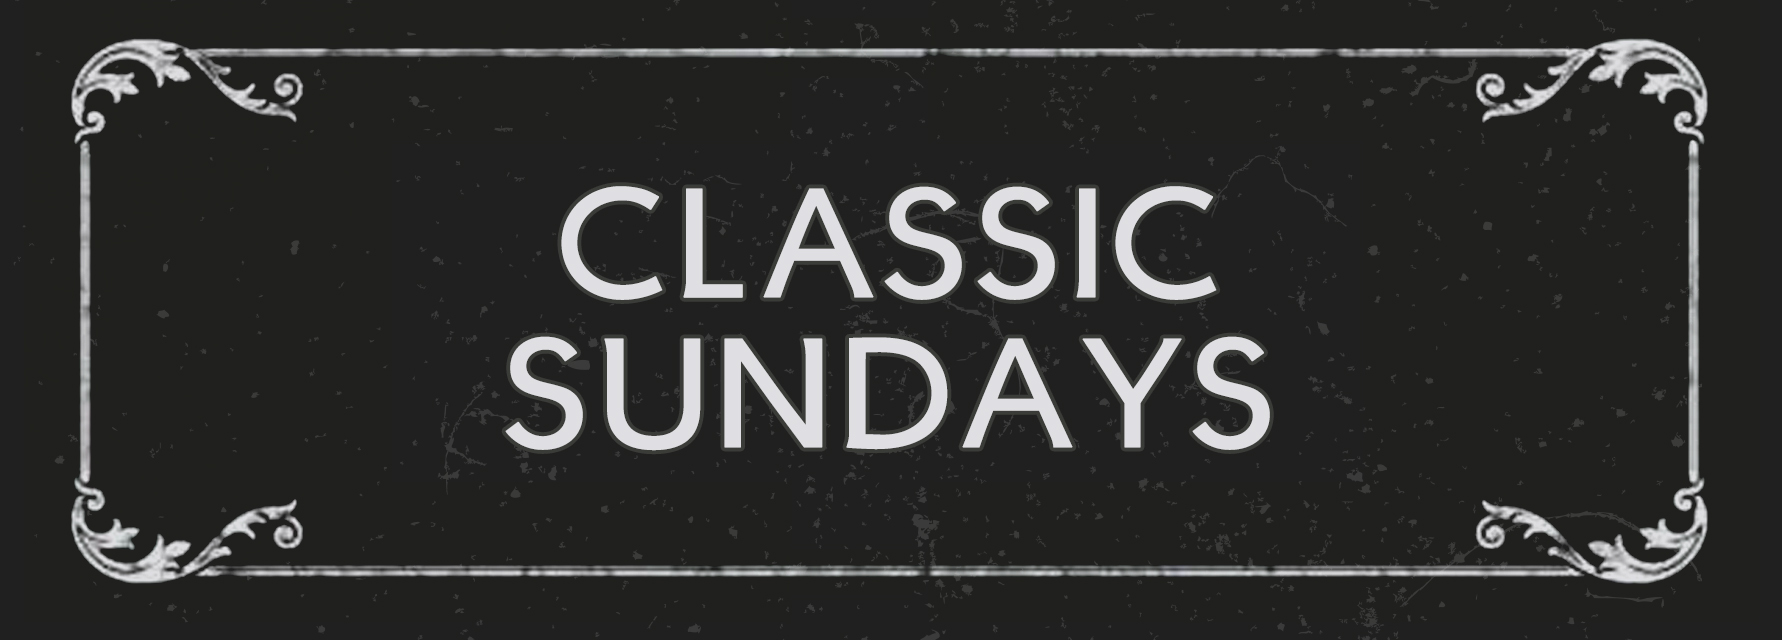 Classic Sundays logo in old style writing